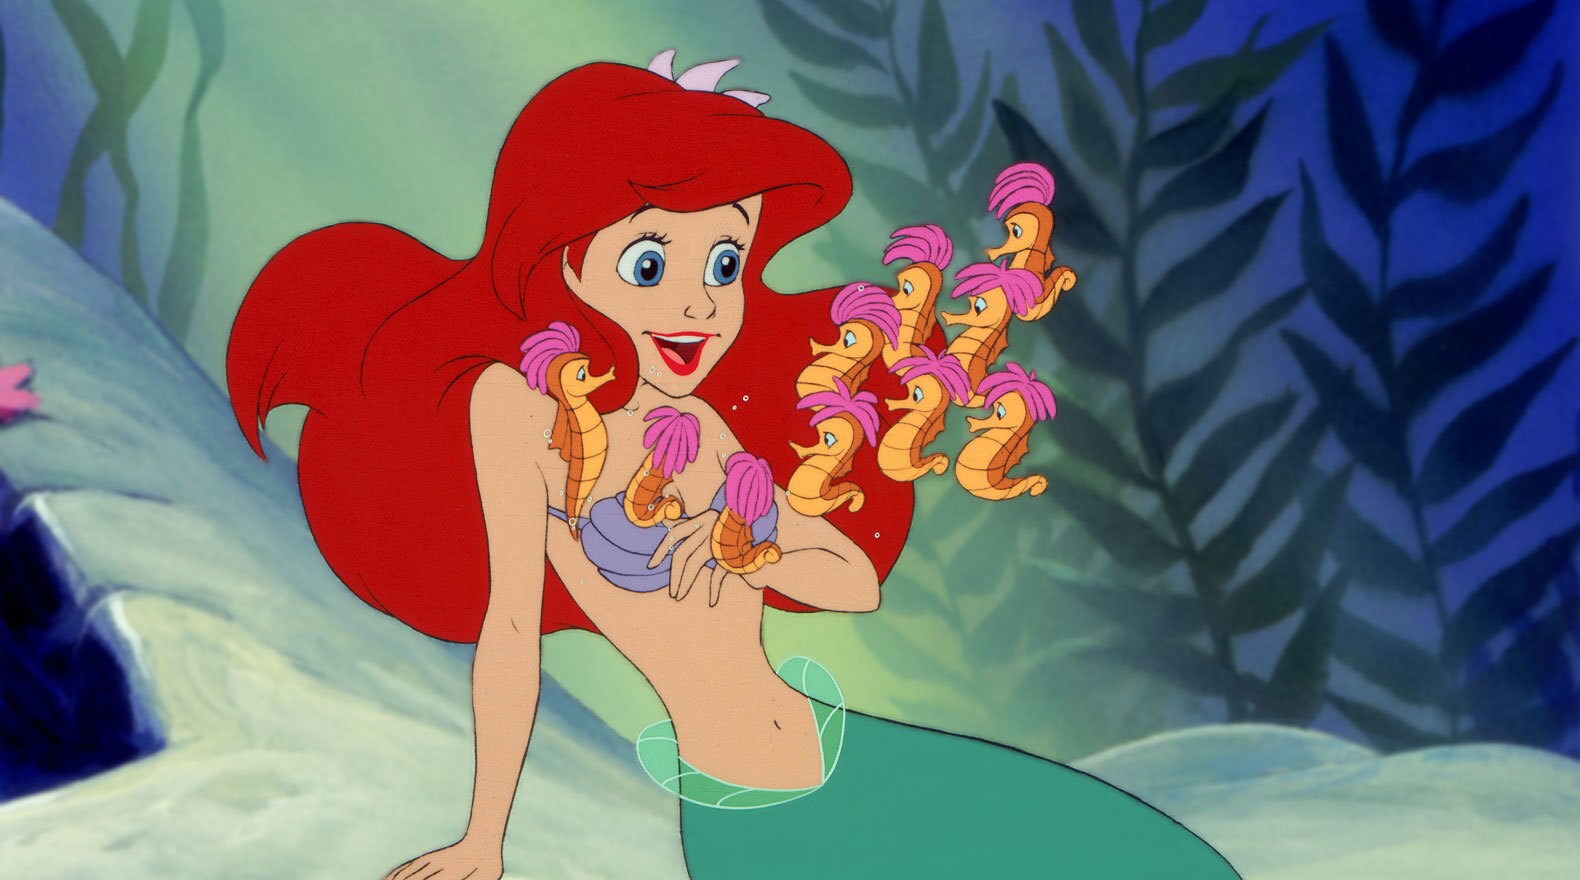 Ariel finds friends everywhere under the sea.